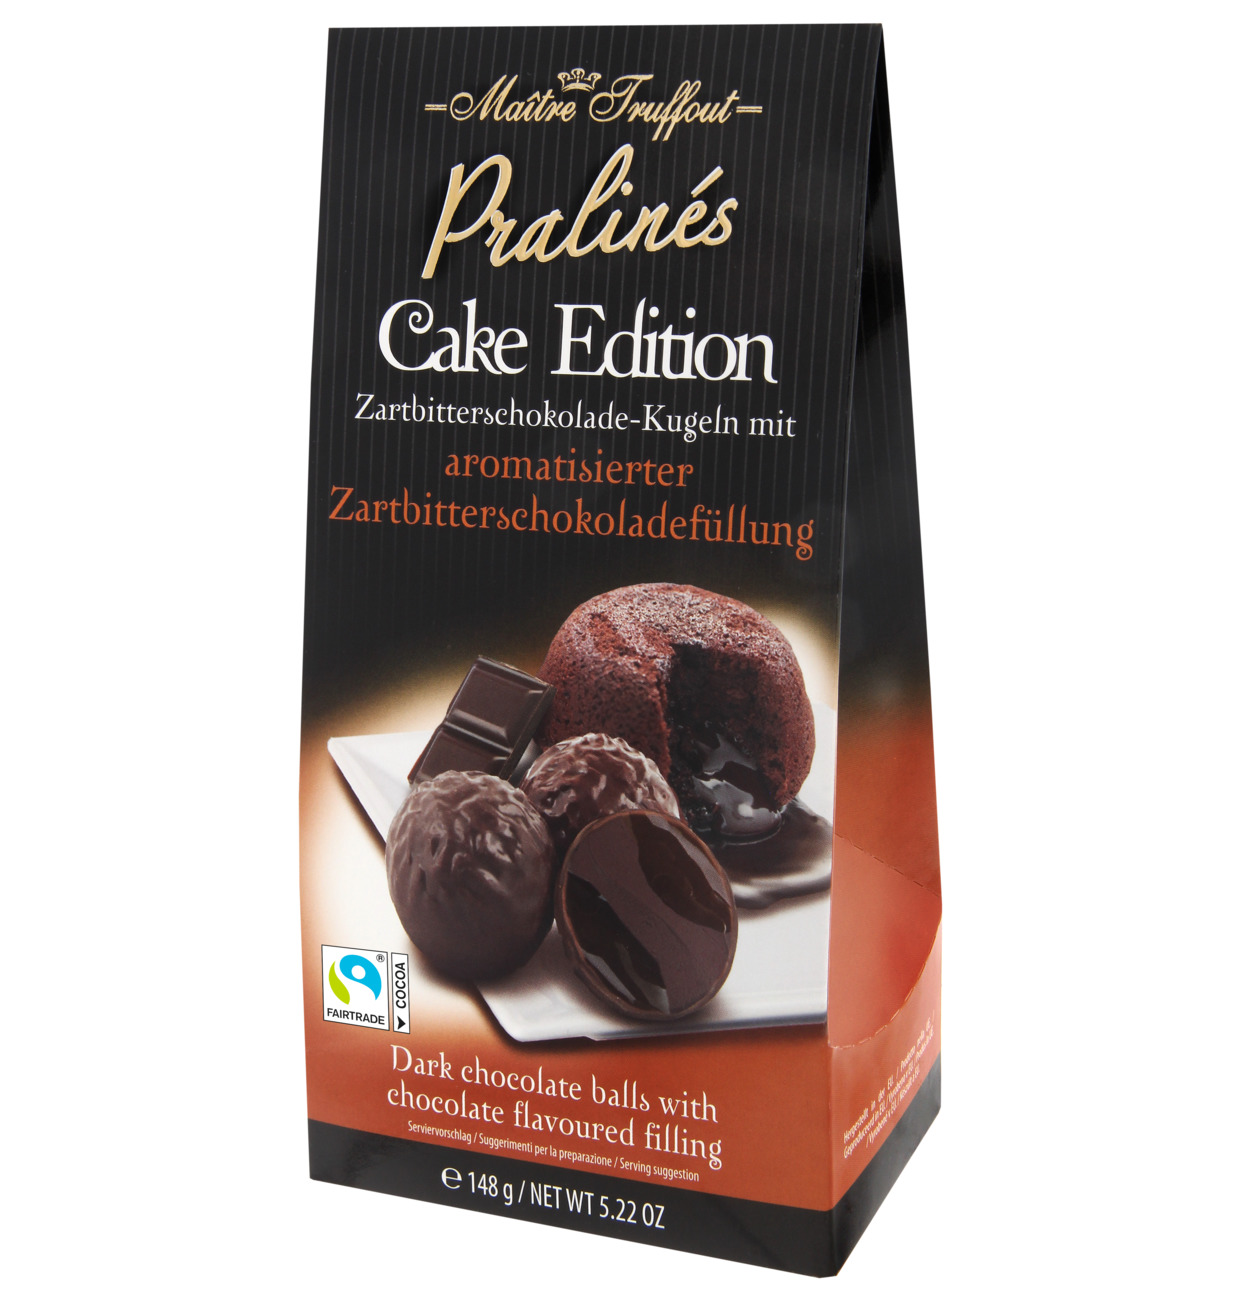 Pralinen Cake Edition – Zartbitterschokolade